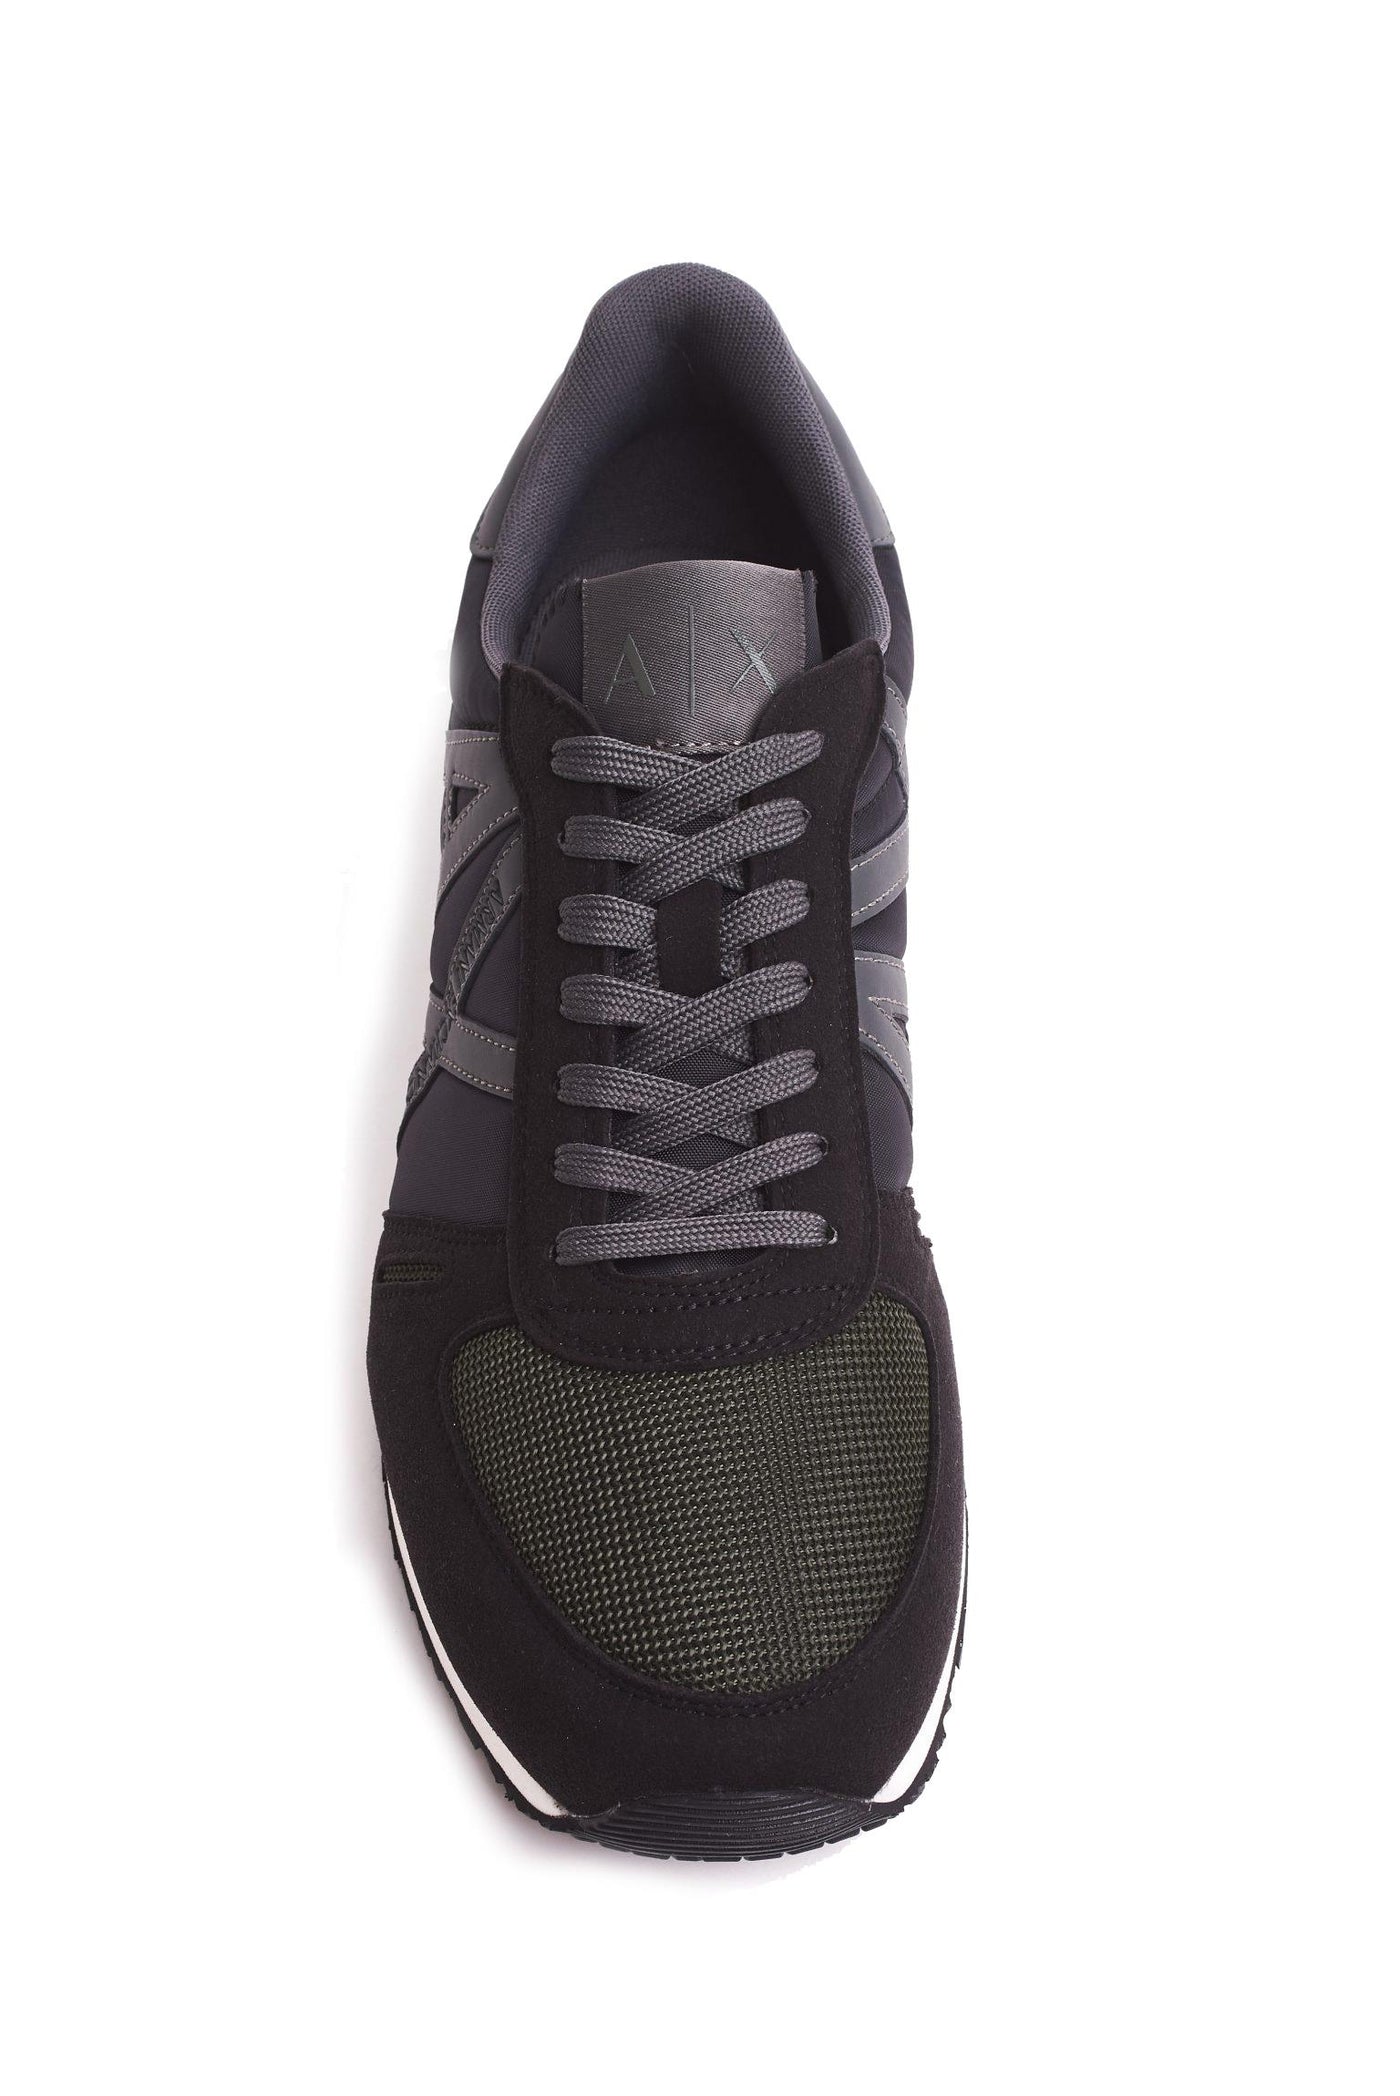 Armani Exchange Sneakers Uomo Xux017 Xv028 Nero